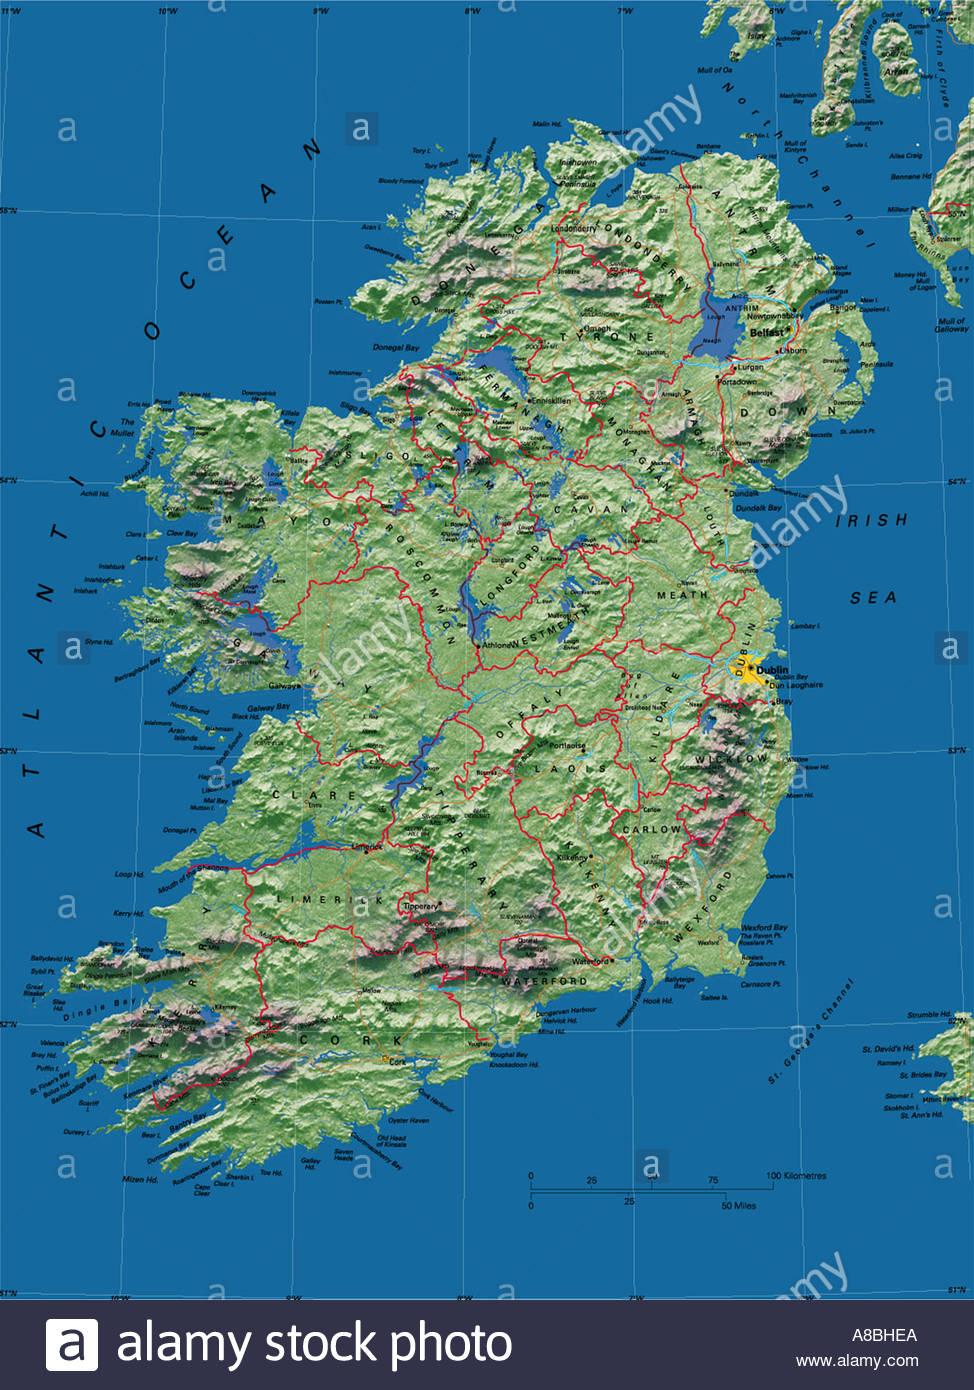 Map Maps Europe Ireland A8BHEA 